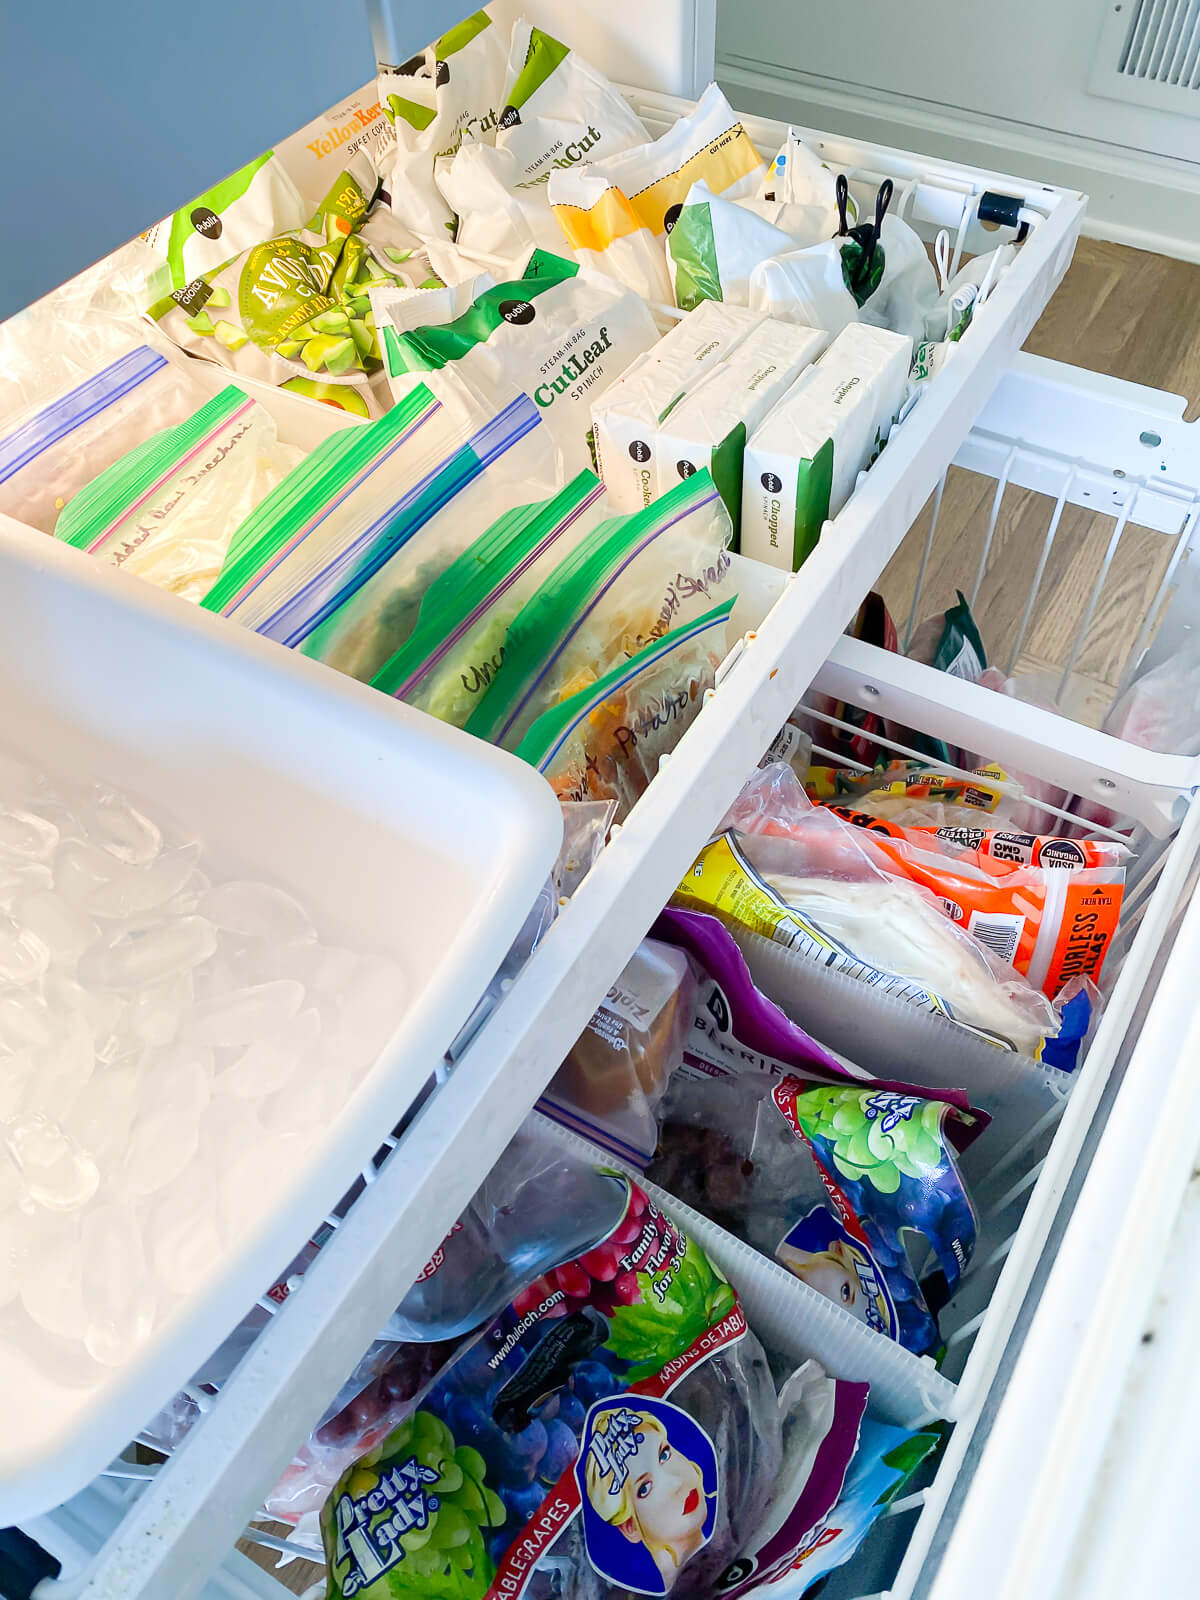 How to organize a freezer